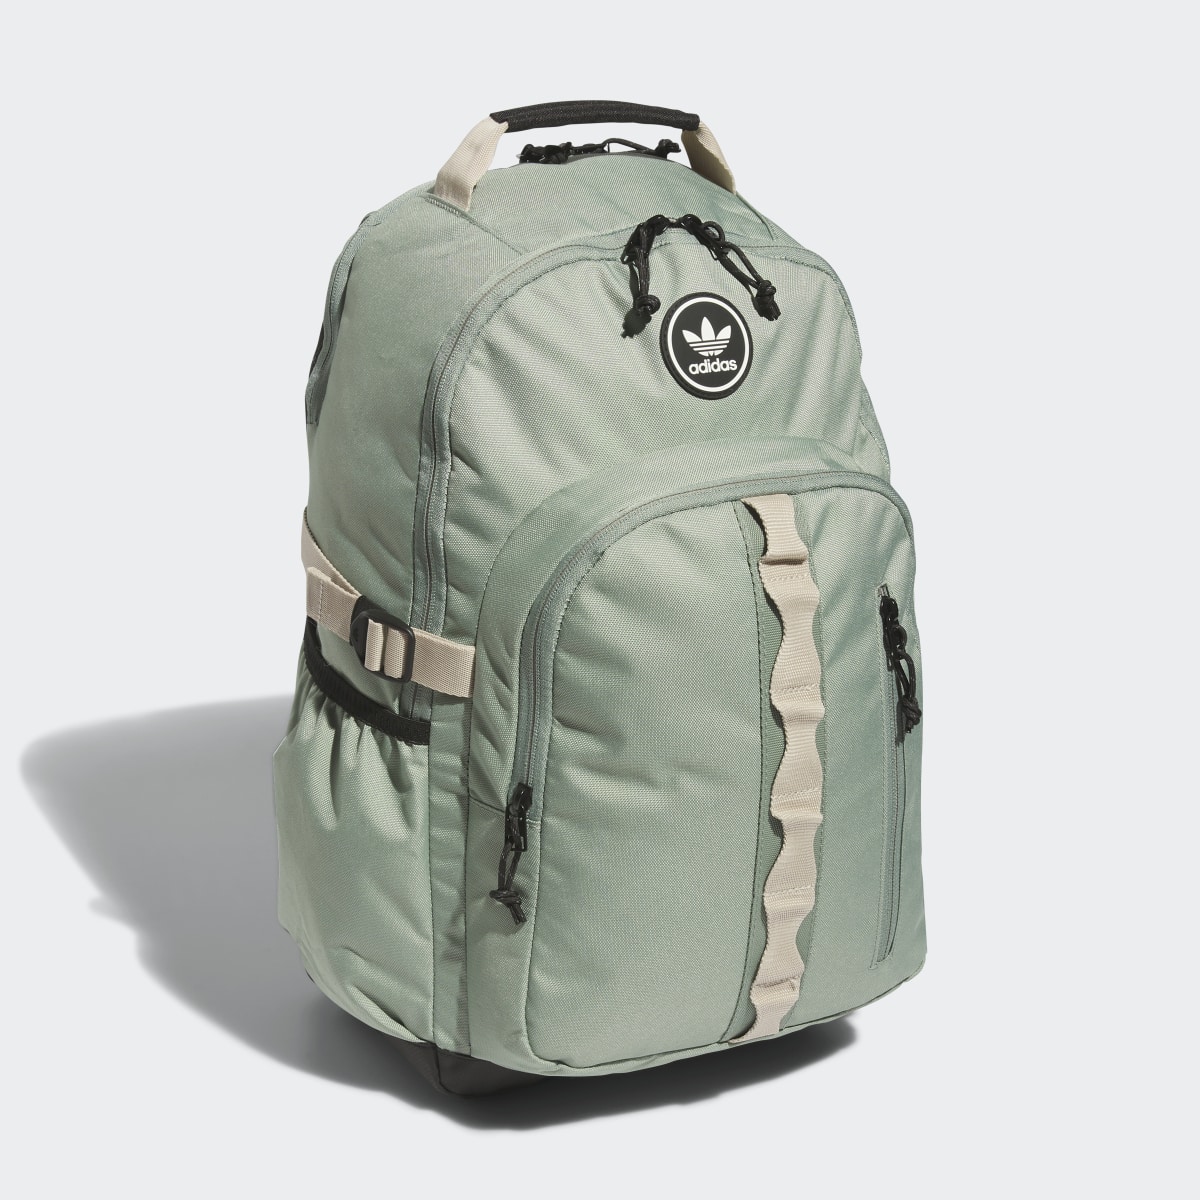 Adidas Originals Trefoil Patch Backpack. 4